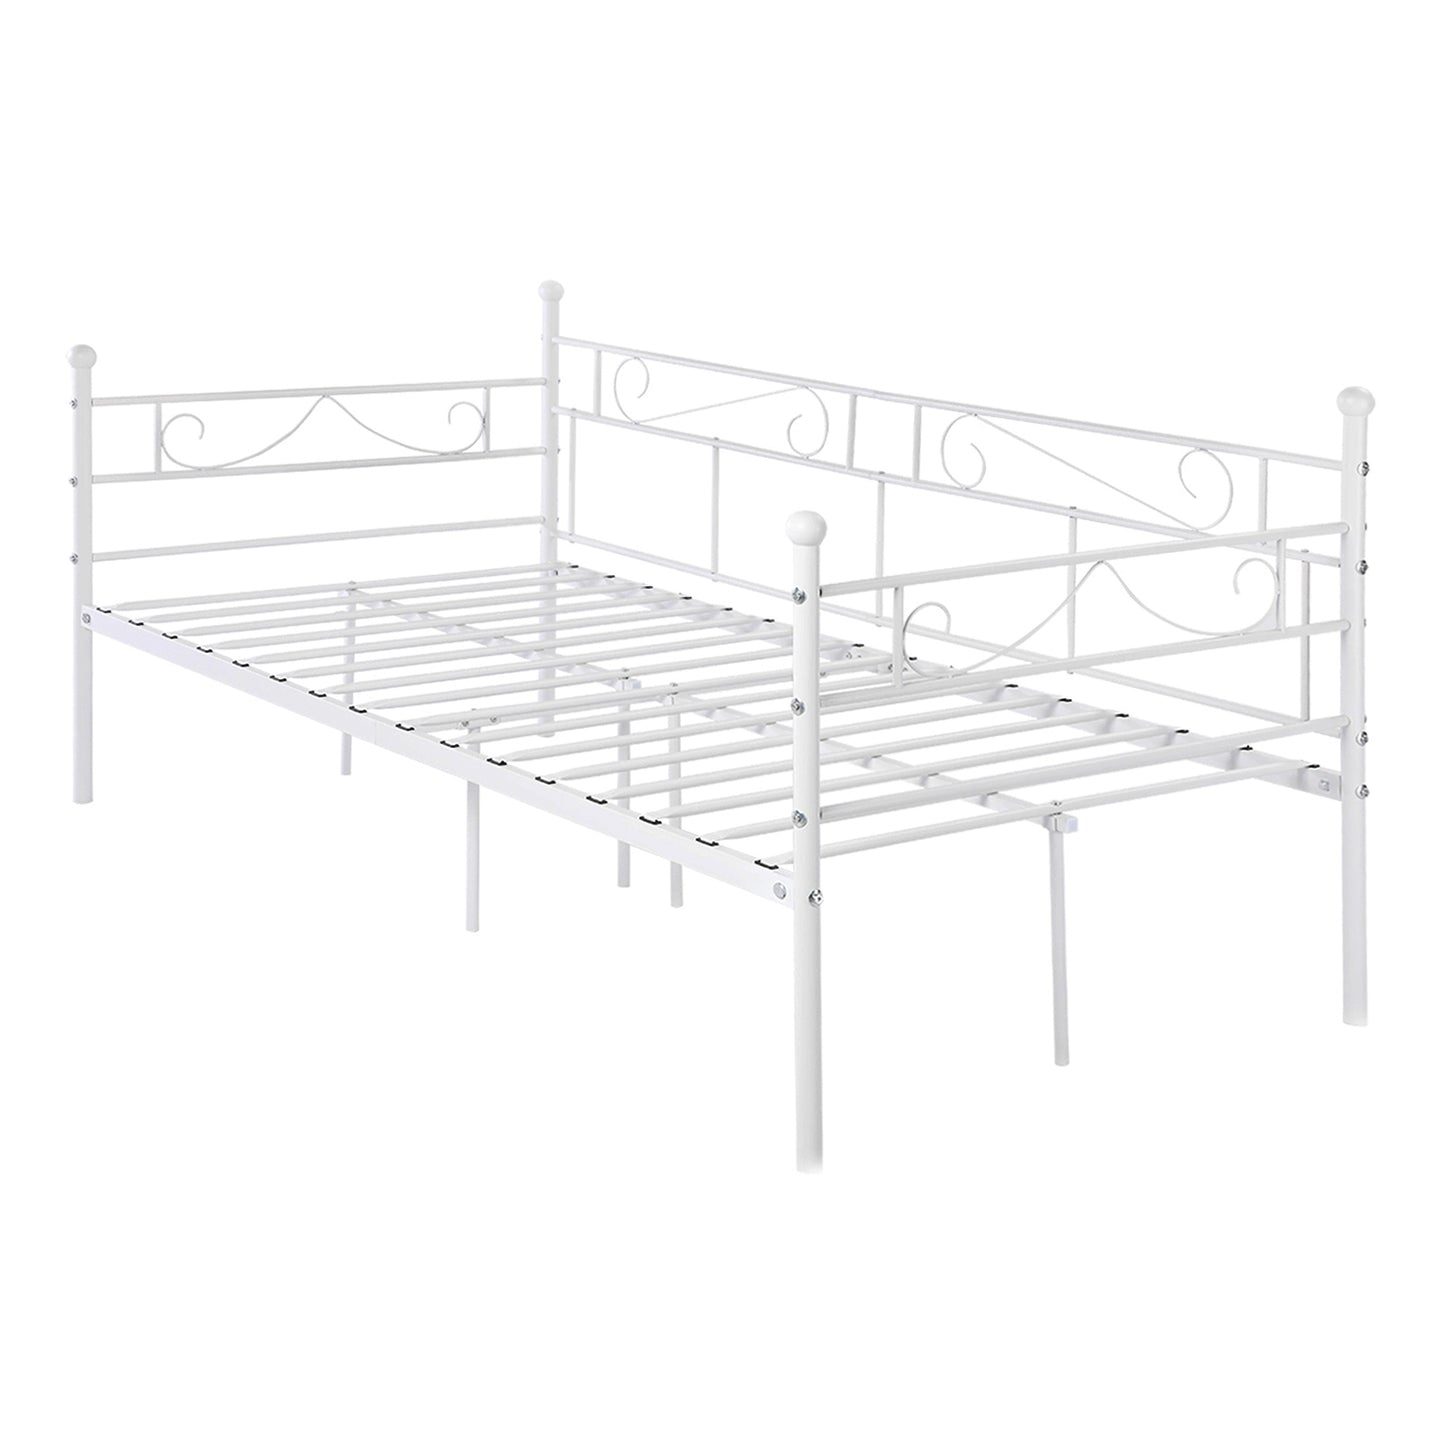 SOROSIS Single Metal Bed 95.5*206.4cm - White